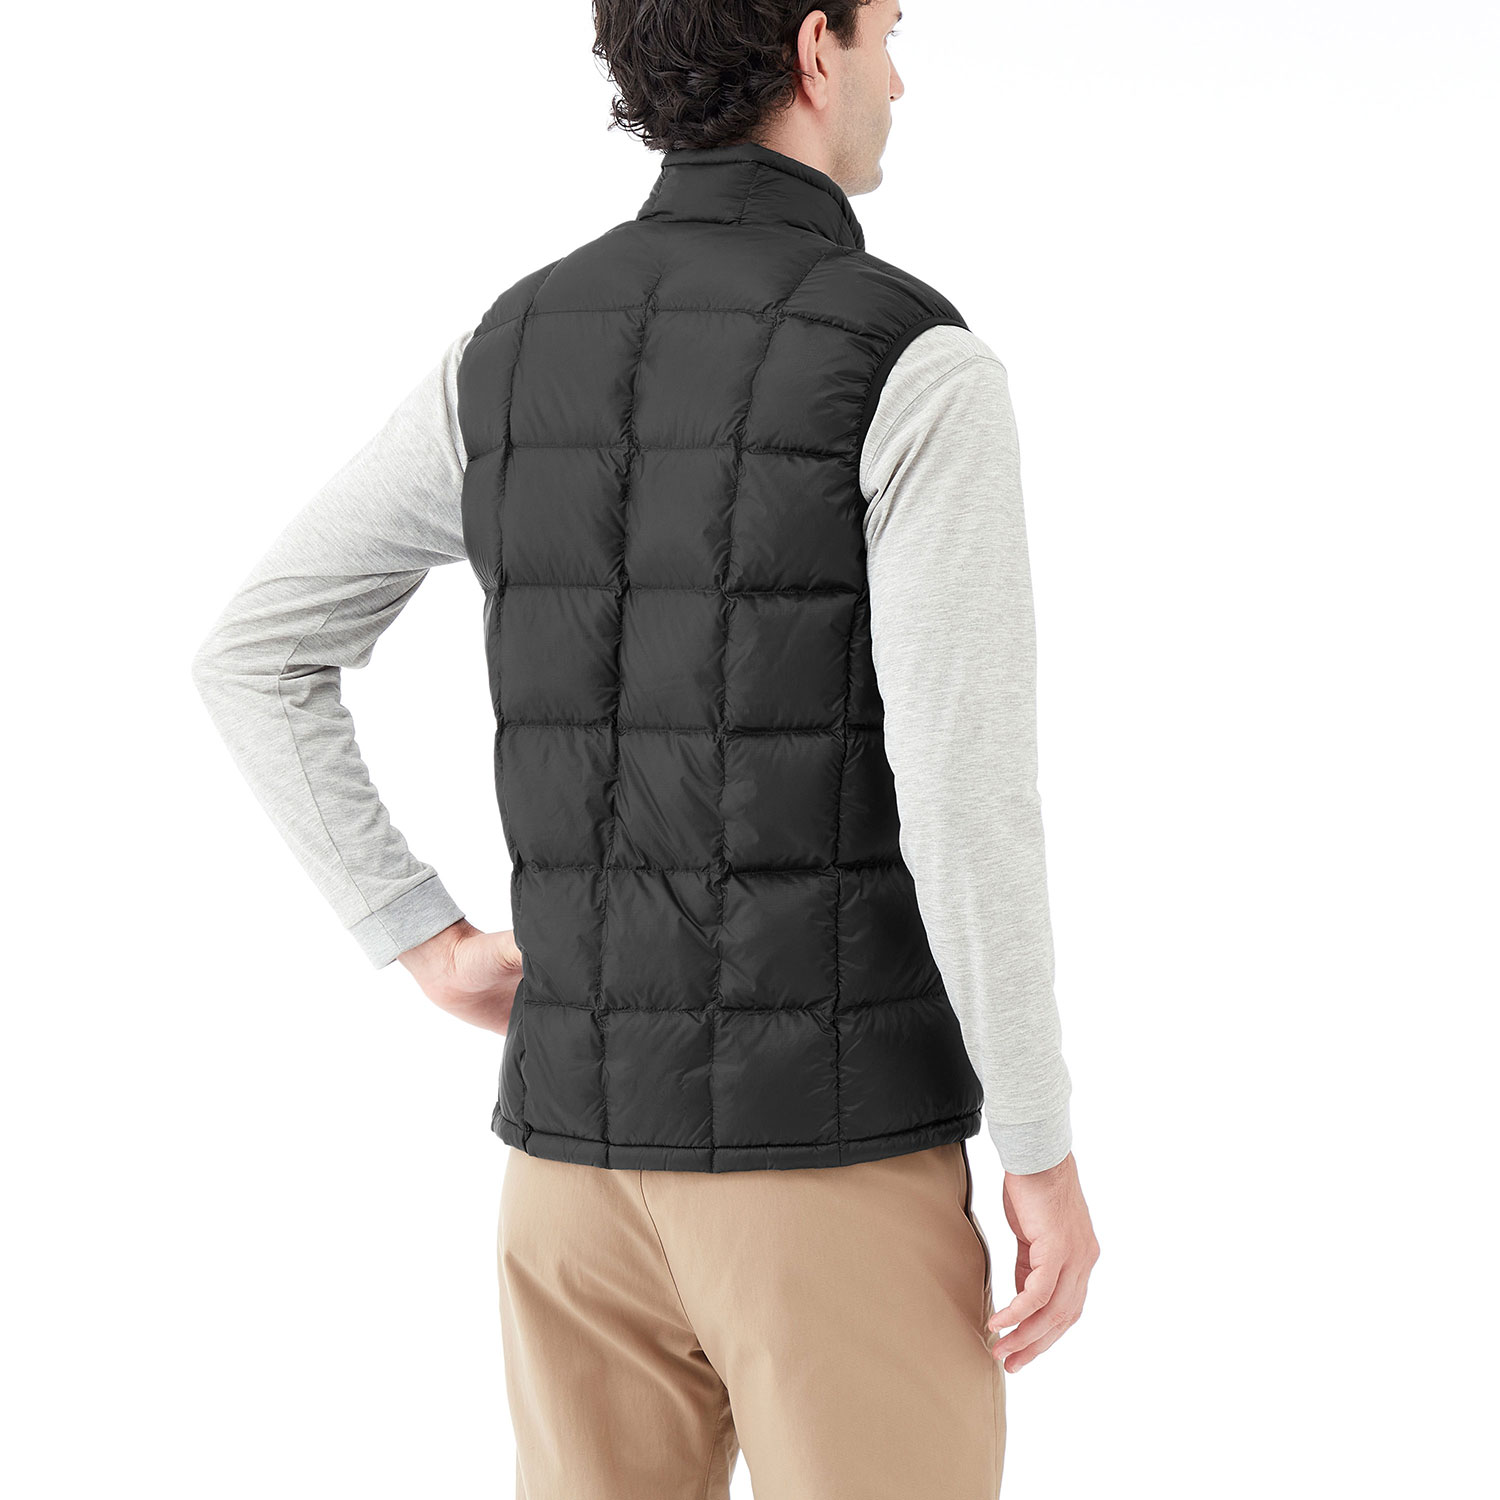 New winter down vest men's large size thermal vest middle-aged and elderly  wear thin vest down jacket liner